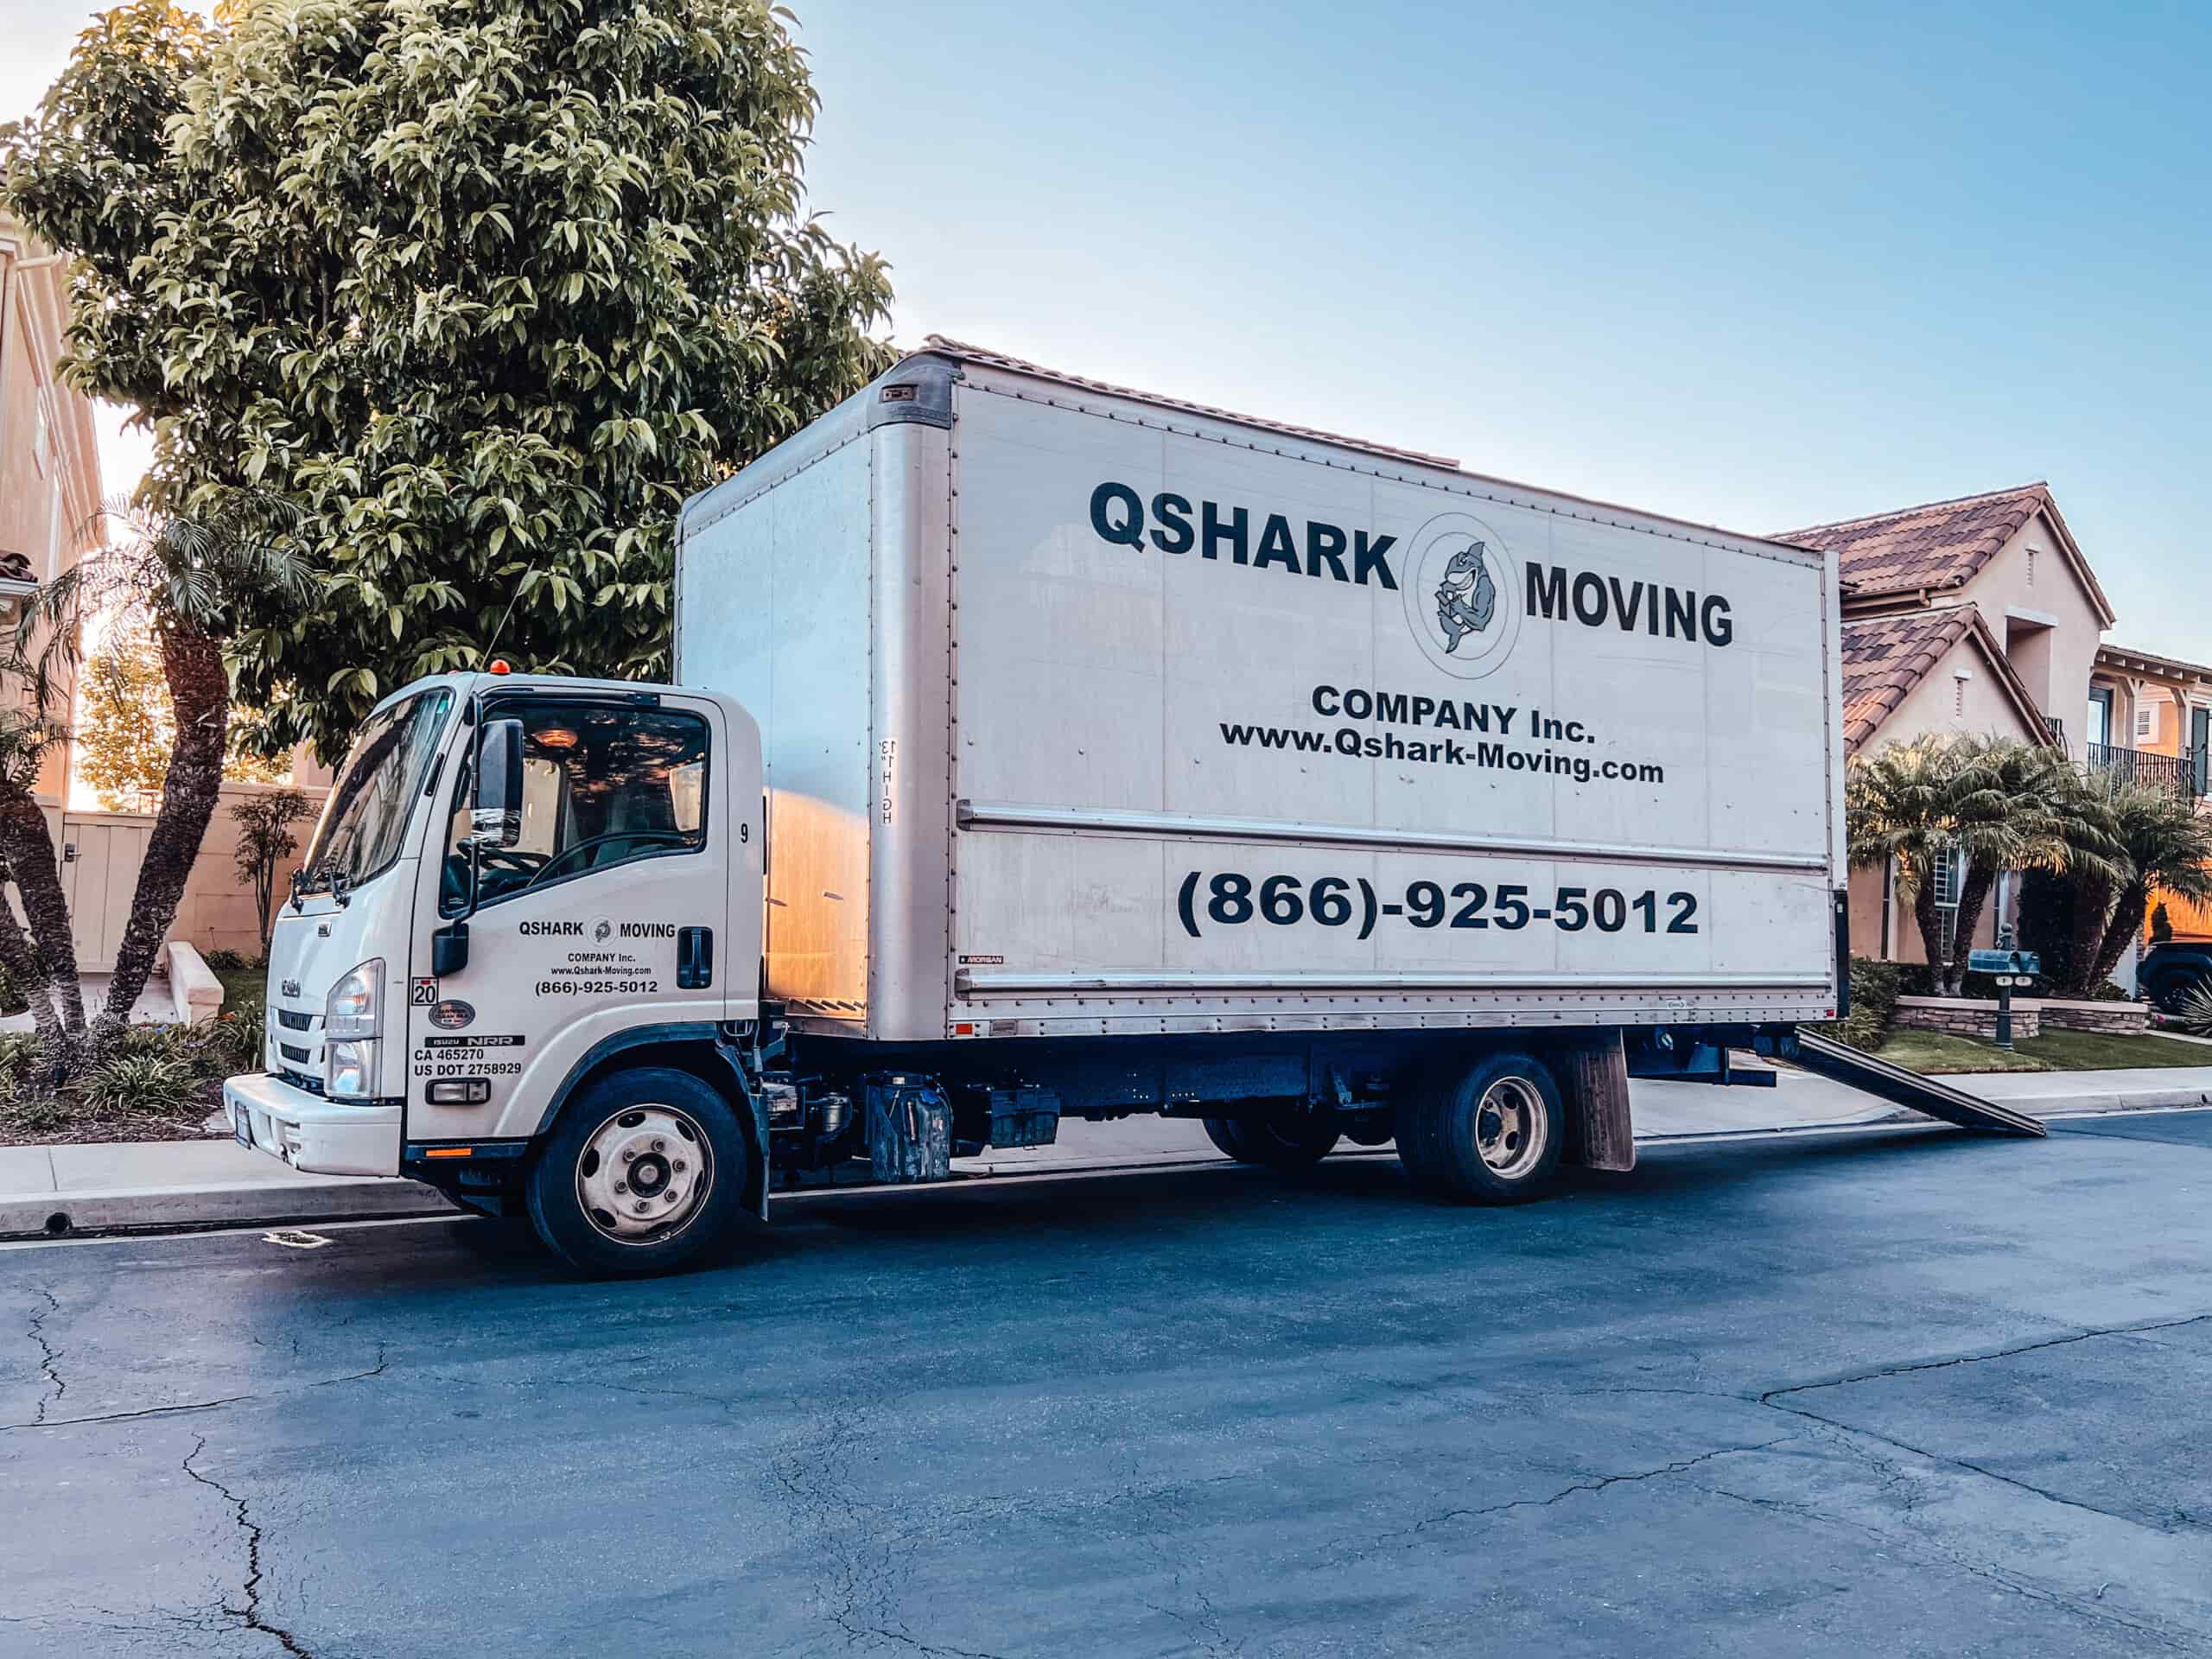 qshark moving truck